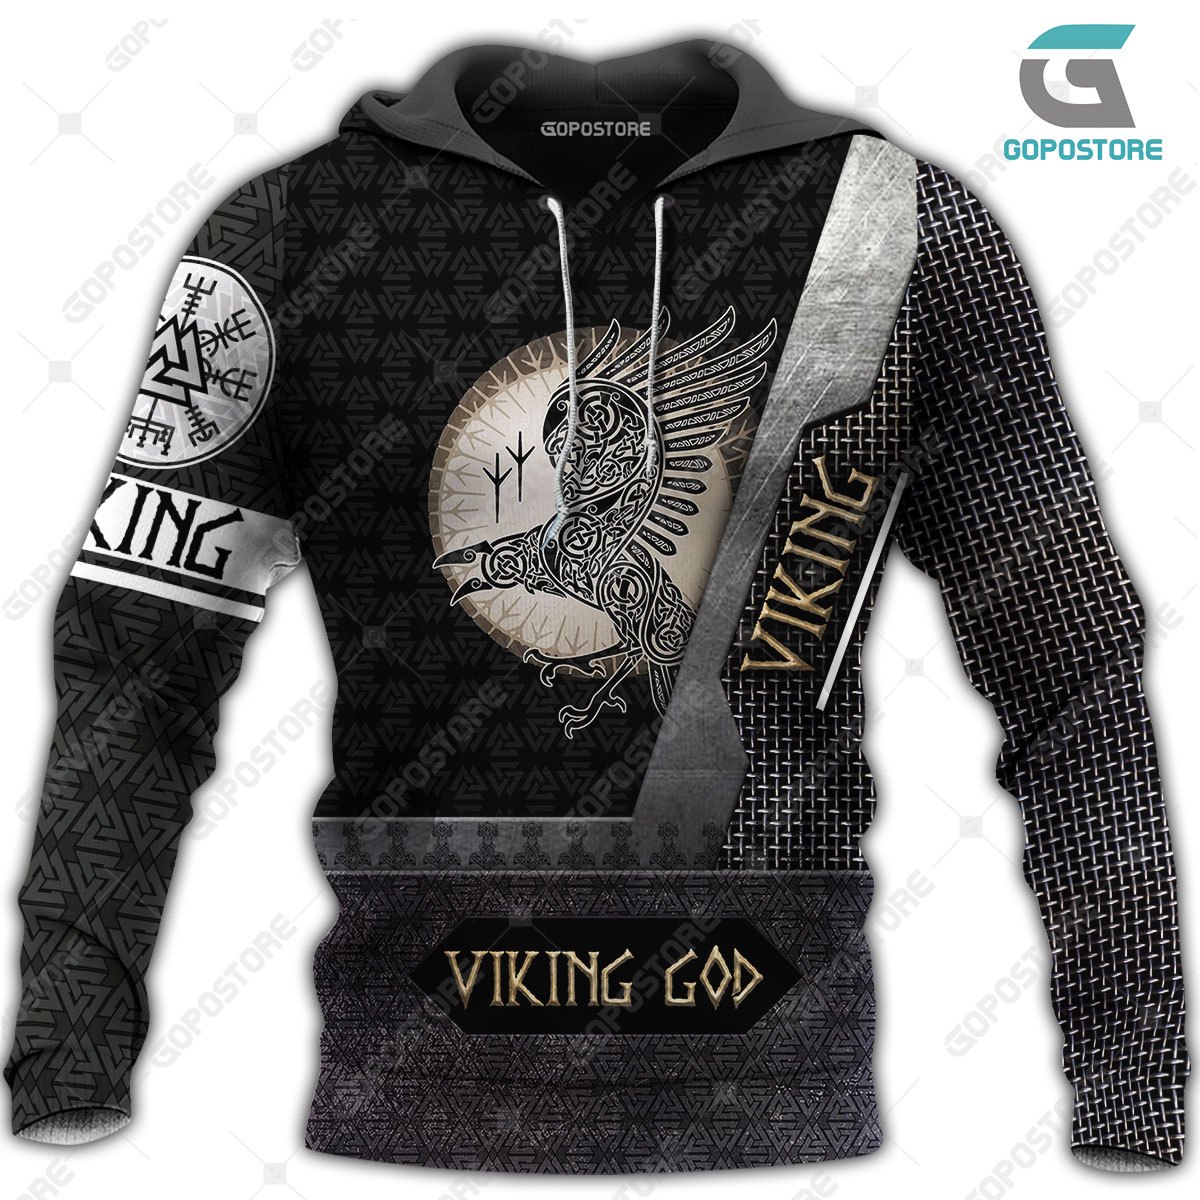 Viking god huginn and muninn full printing hoodie